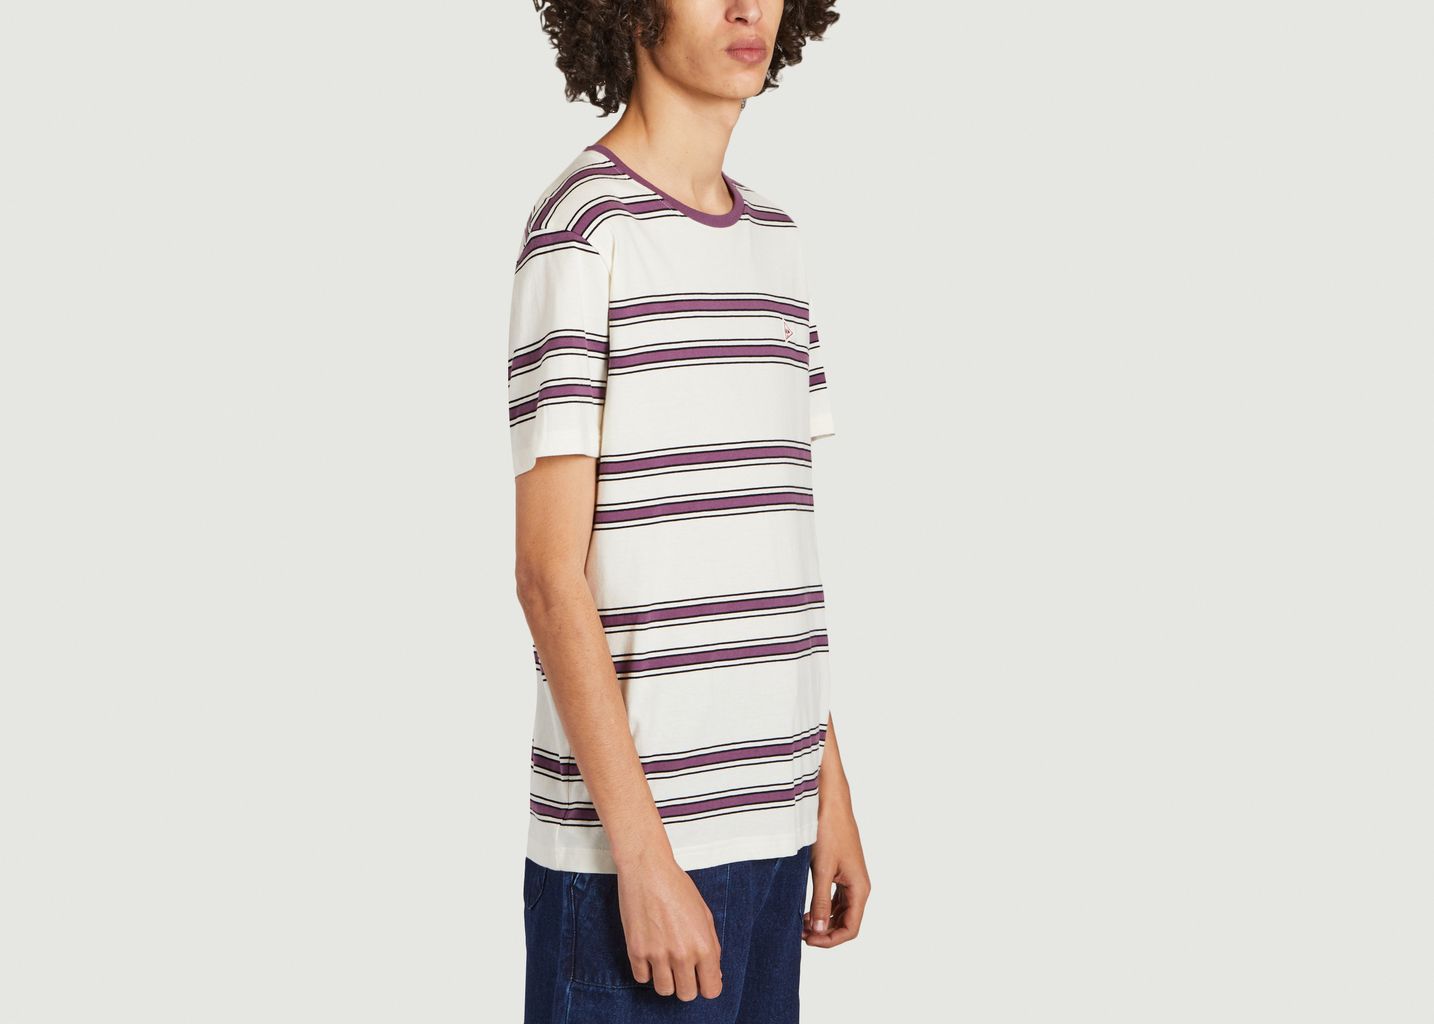 Screech organic cotton striped T-shirt - Olow